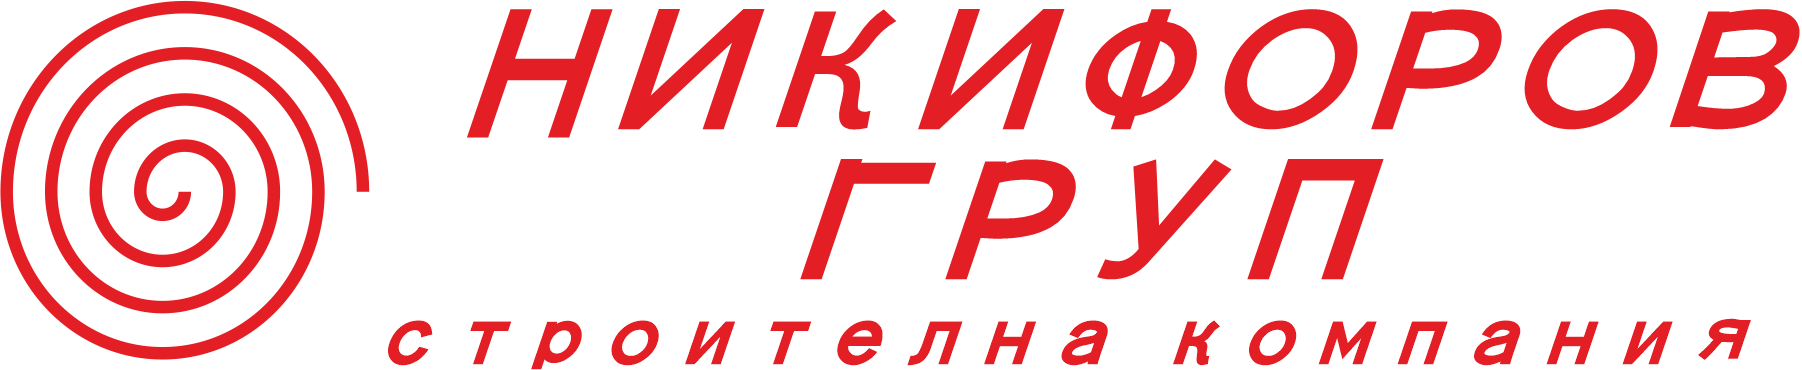 Nikiforov Group